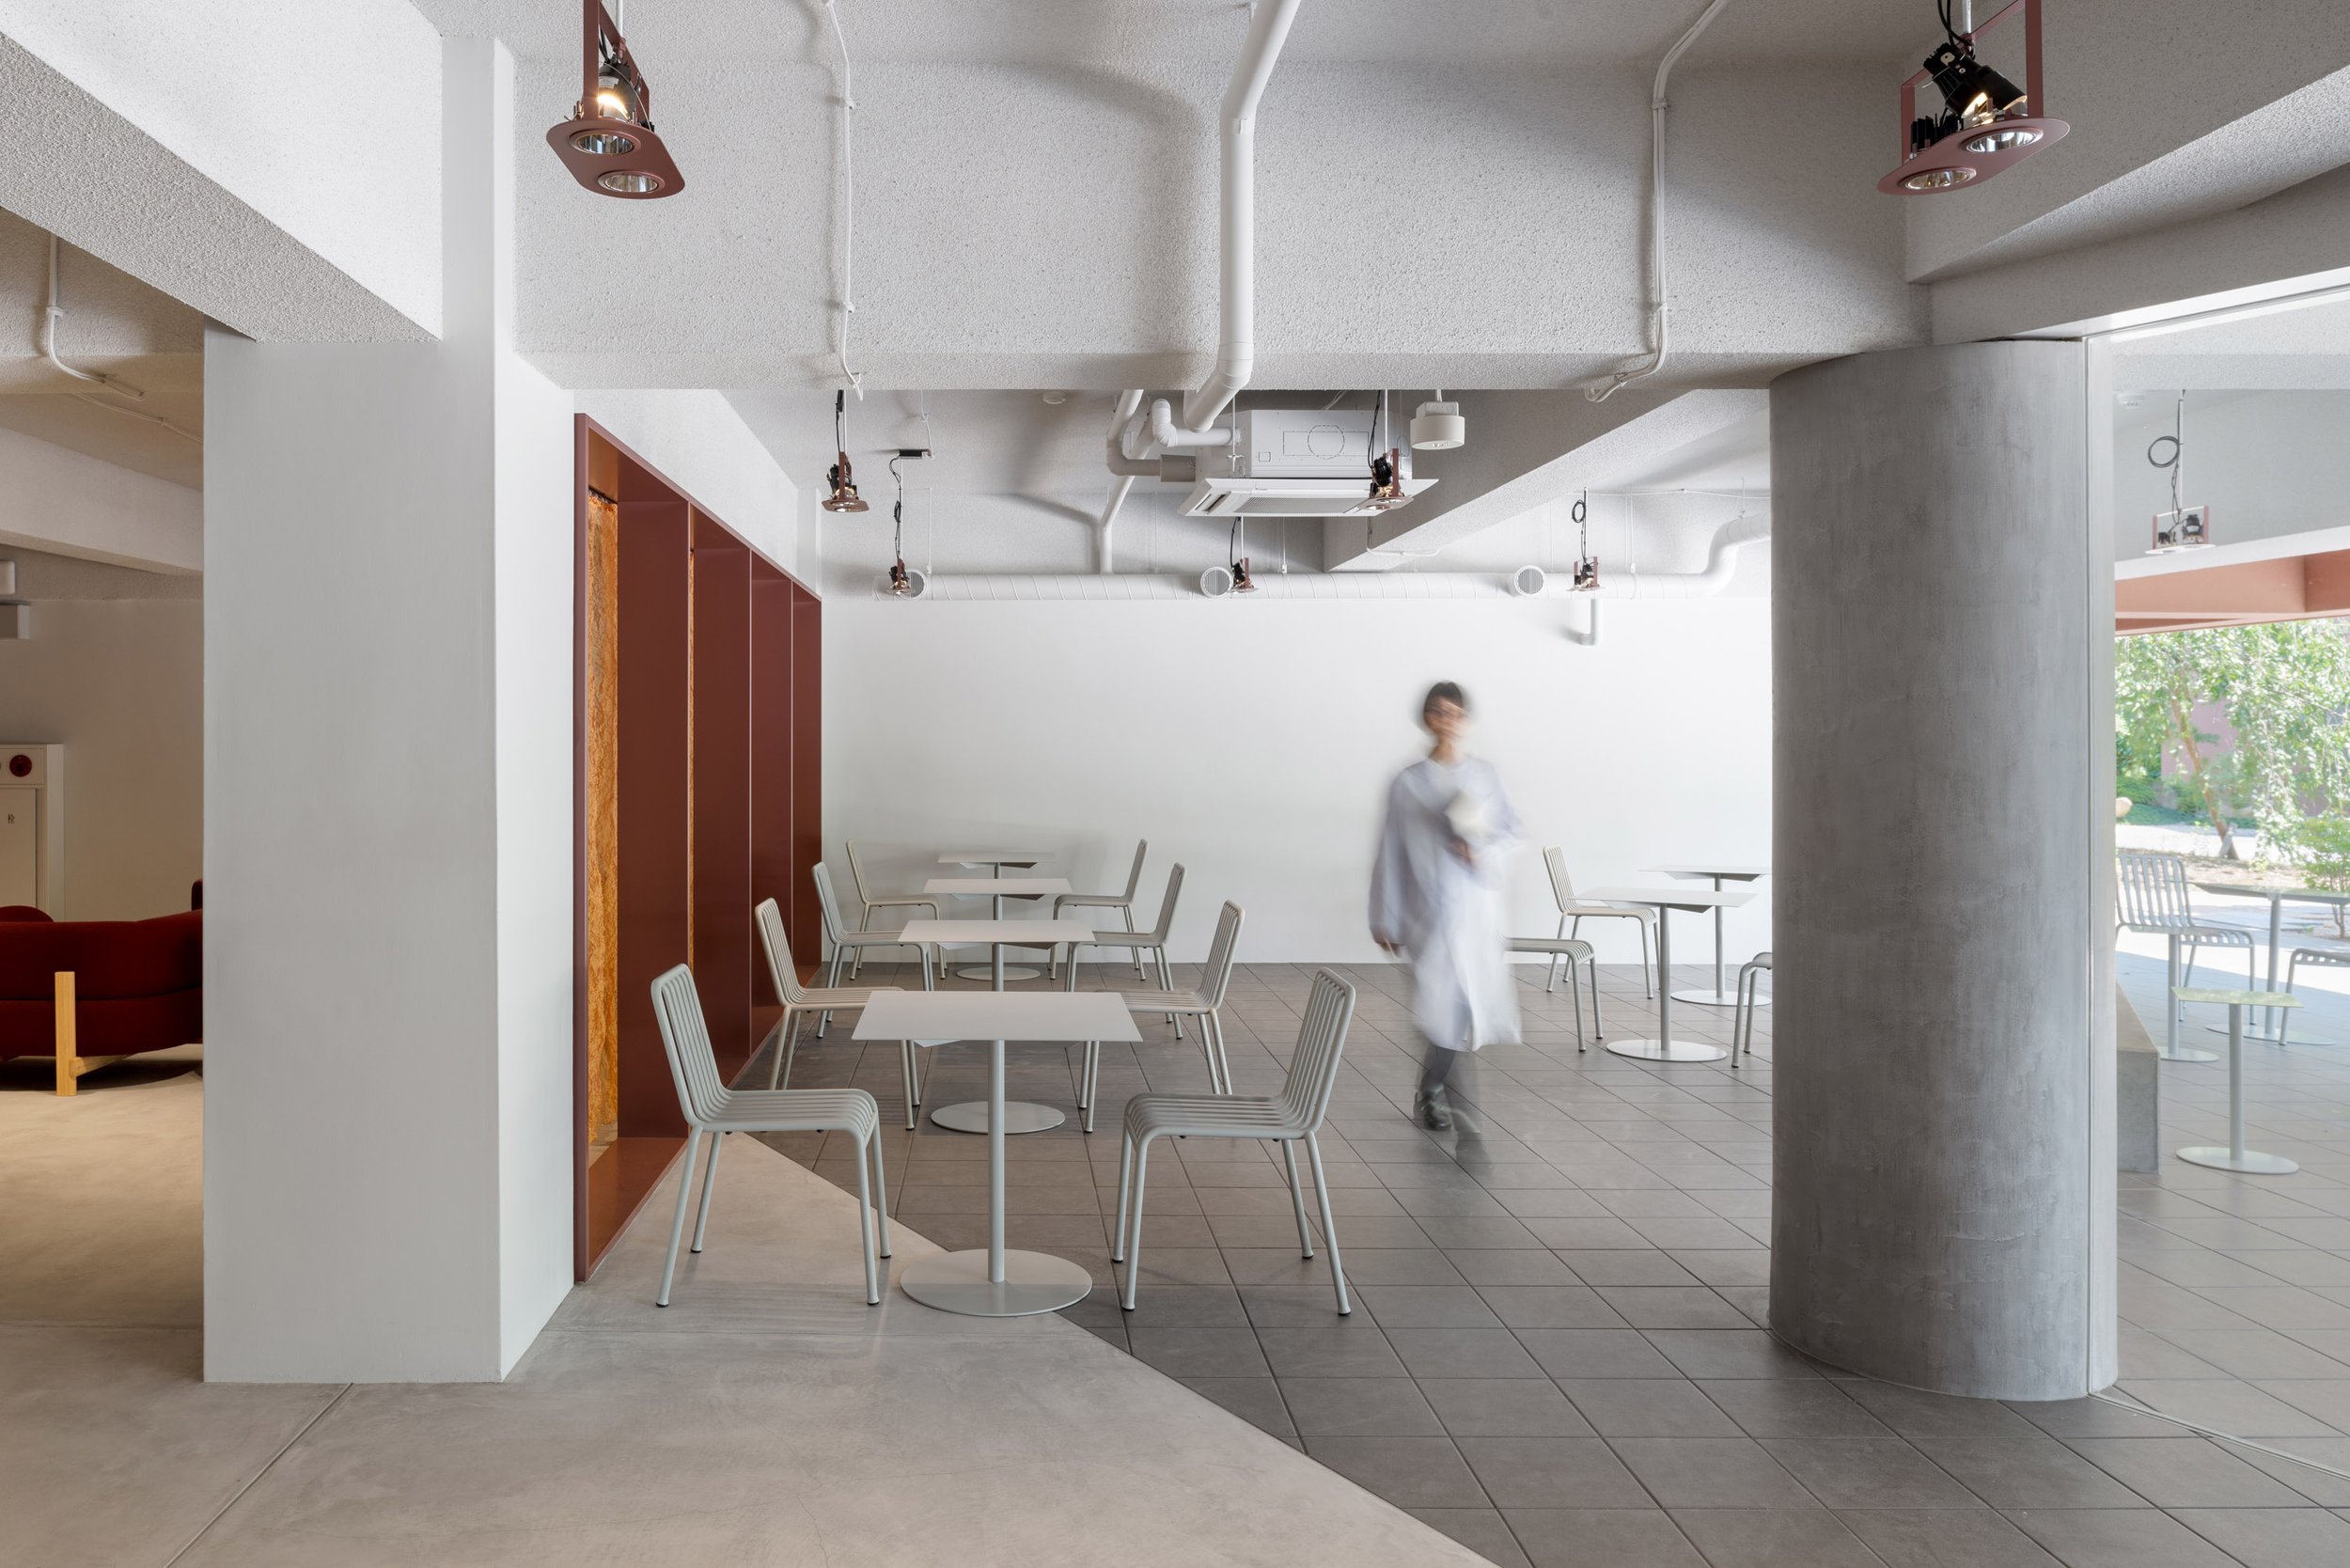  REIICHI IKEDA DESIGNの池田励一がインテリアデザインを手掛けた日本新薬のオフィス「KOKU」   